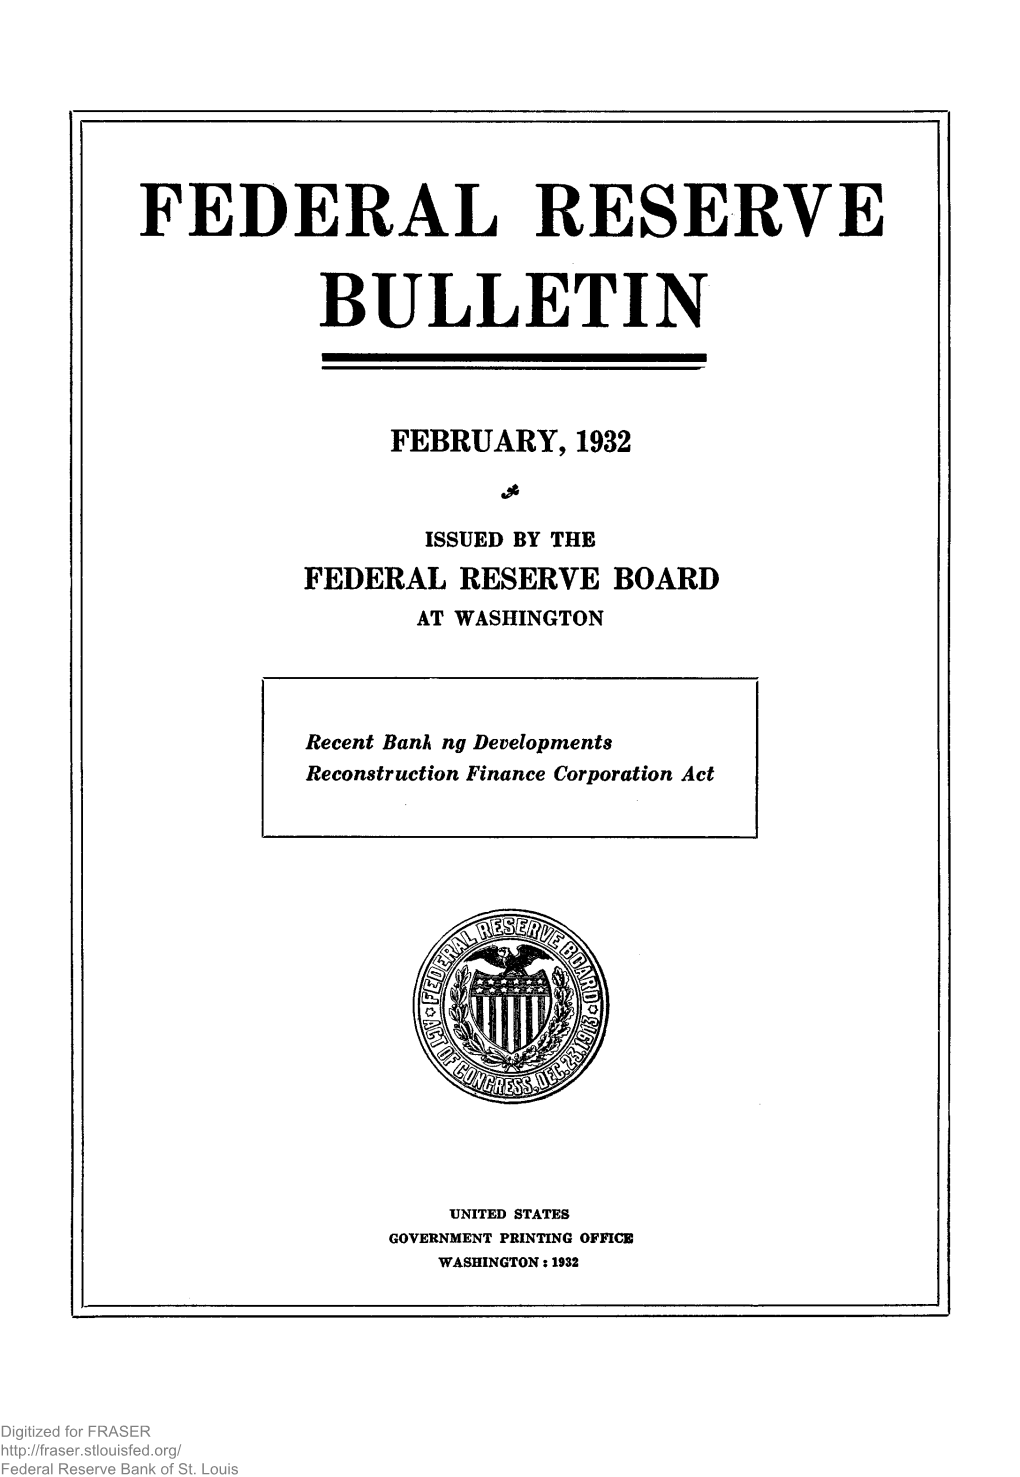 Federal Reserve Bulletin February 1932